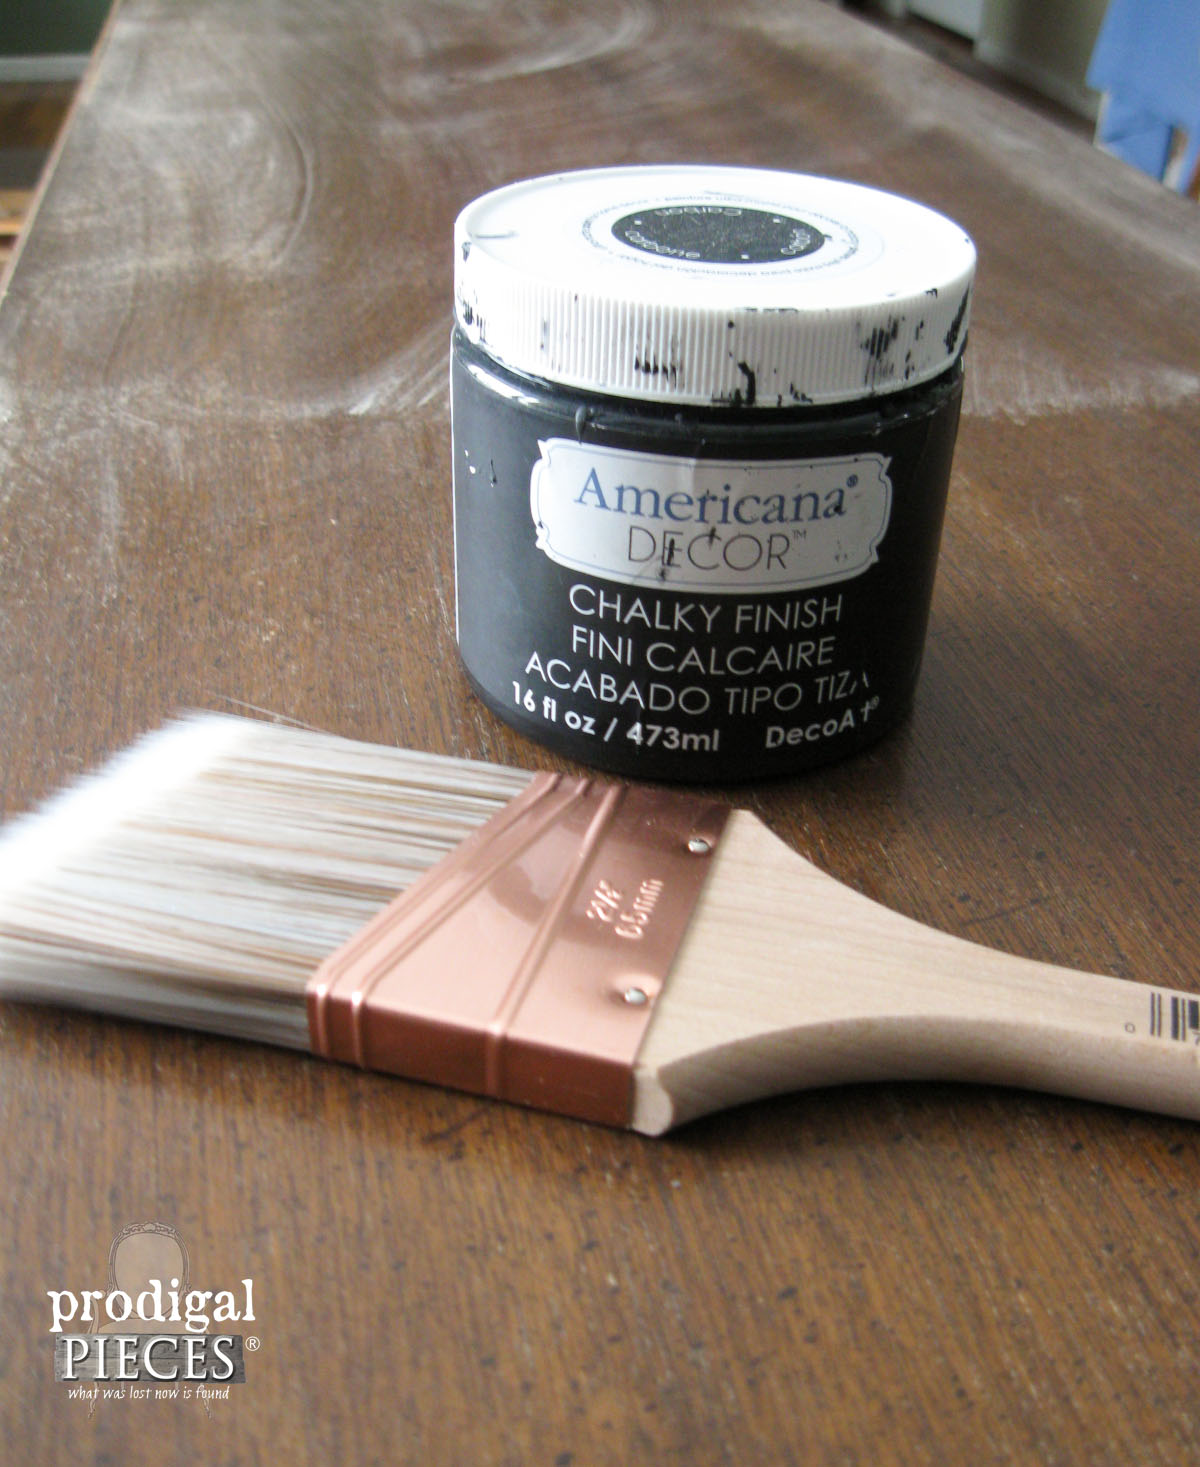 Using DecoArt Chalk Finish Carbon Paint to Update Dresser | Prodigal Pieces | www.prodigalpieces.com